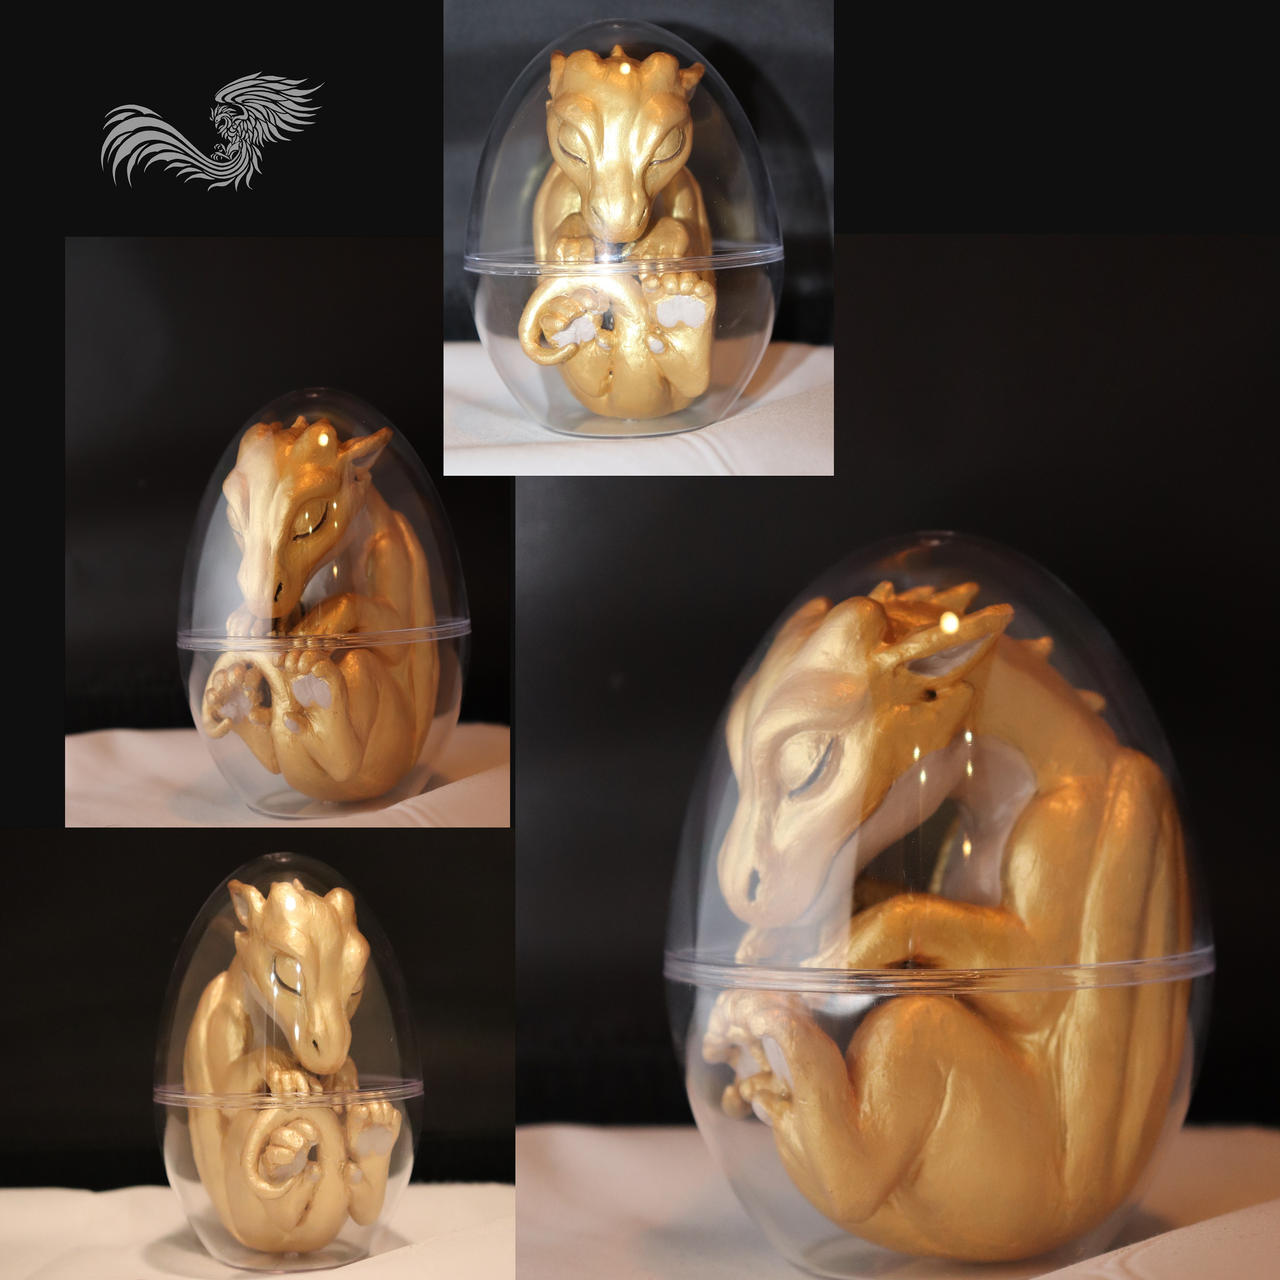 Baby dragon sculpture